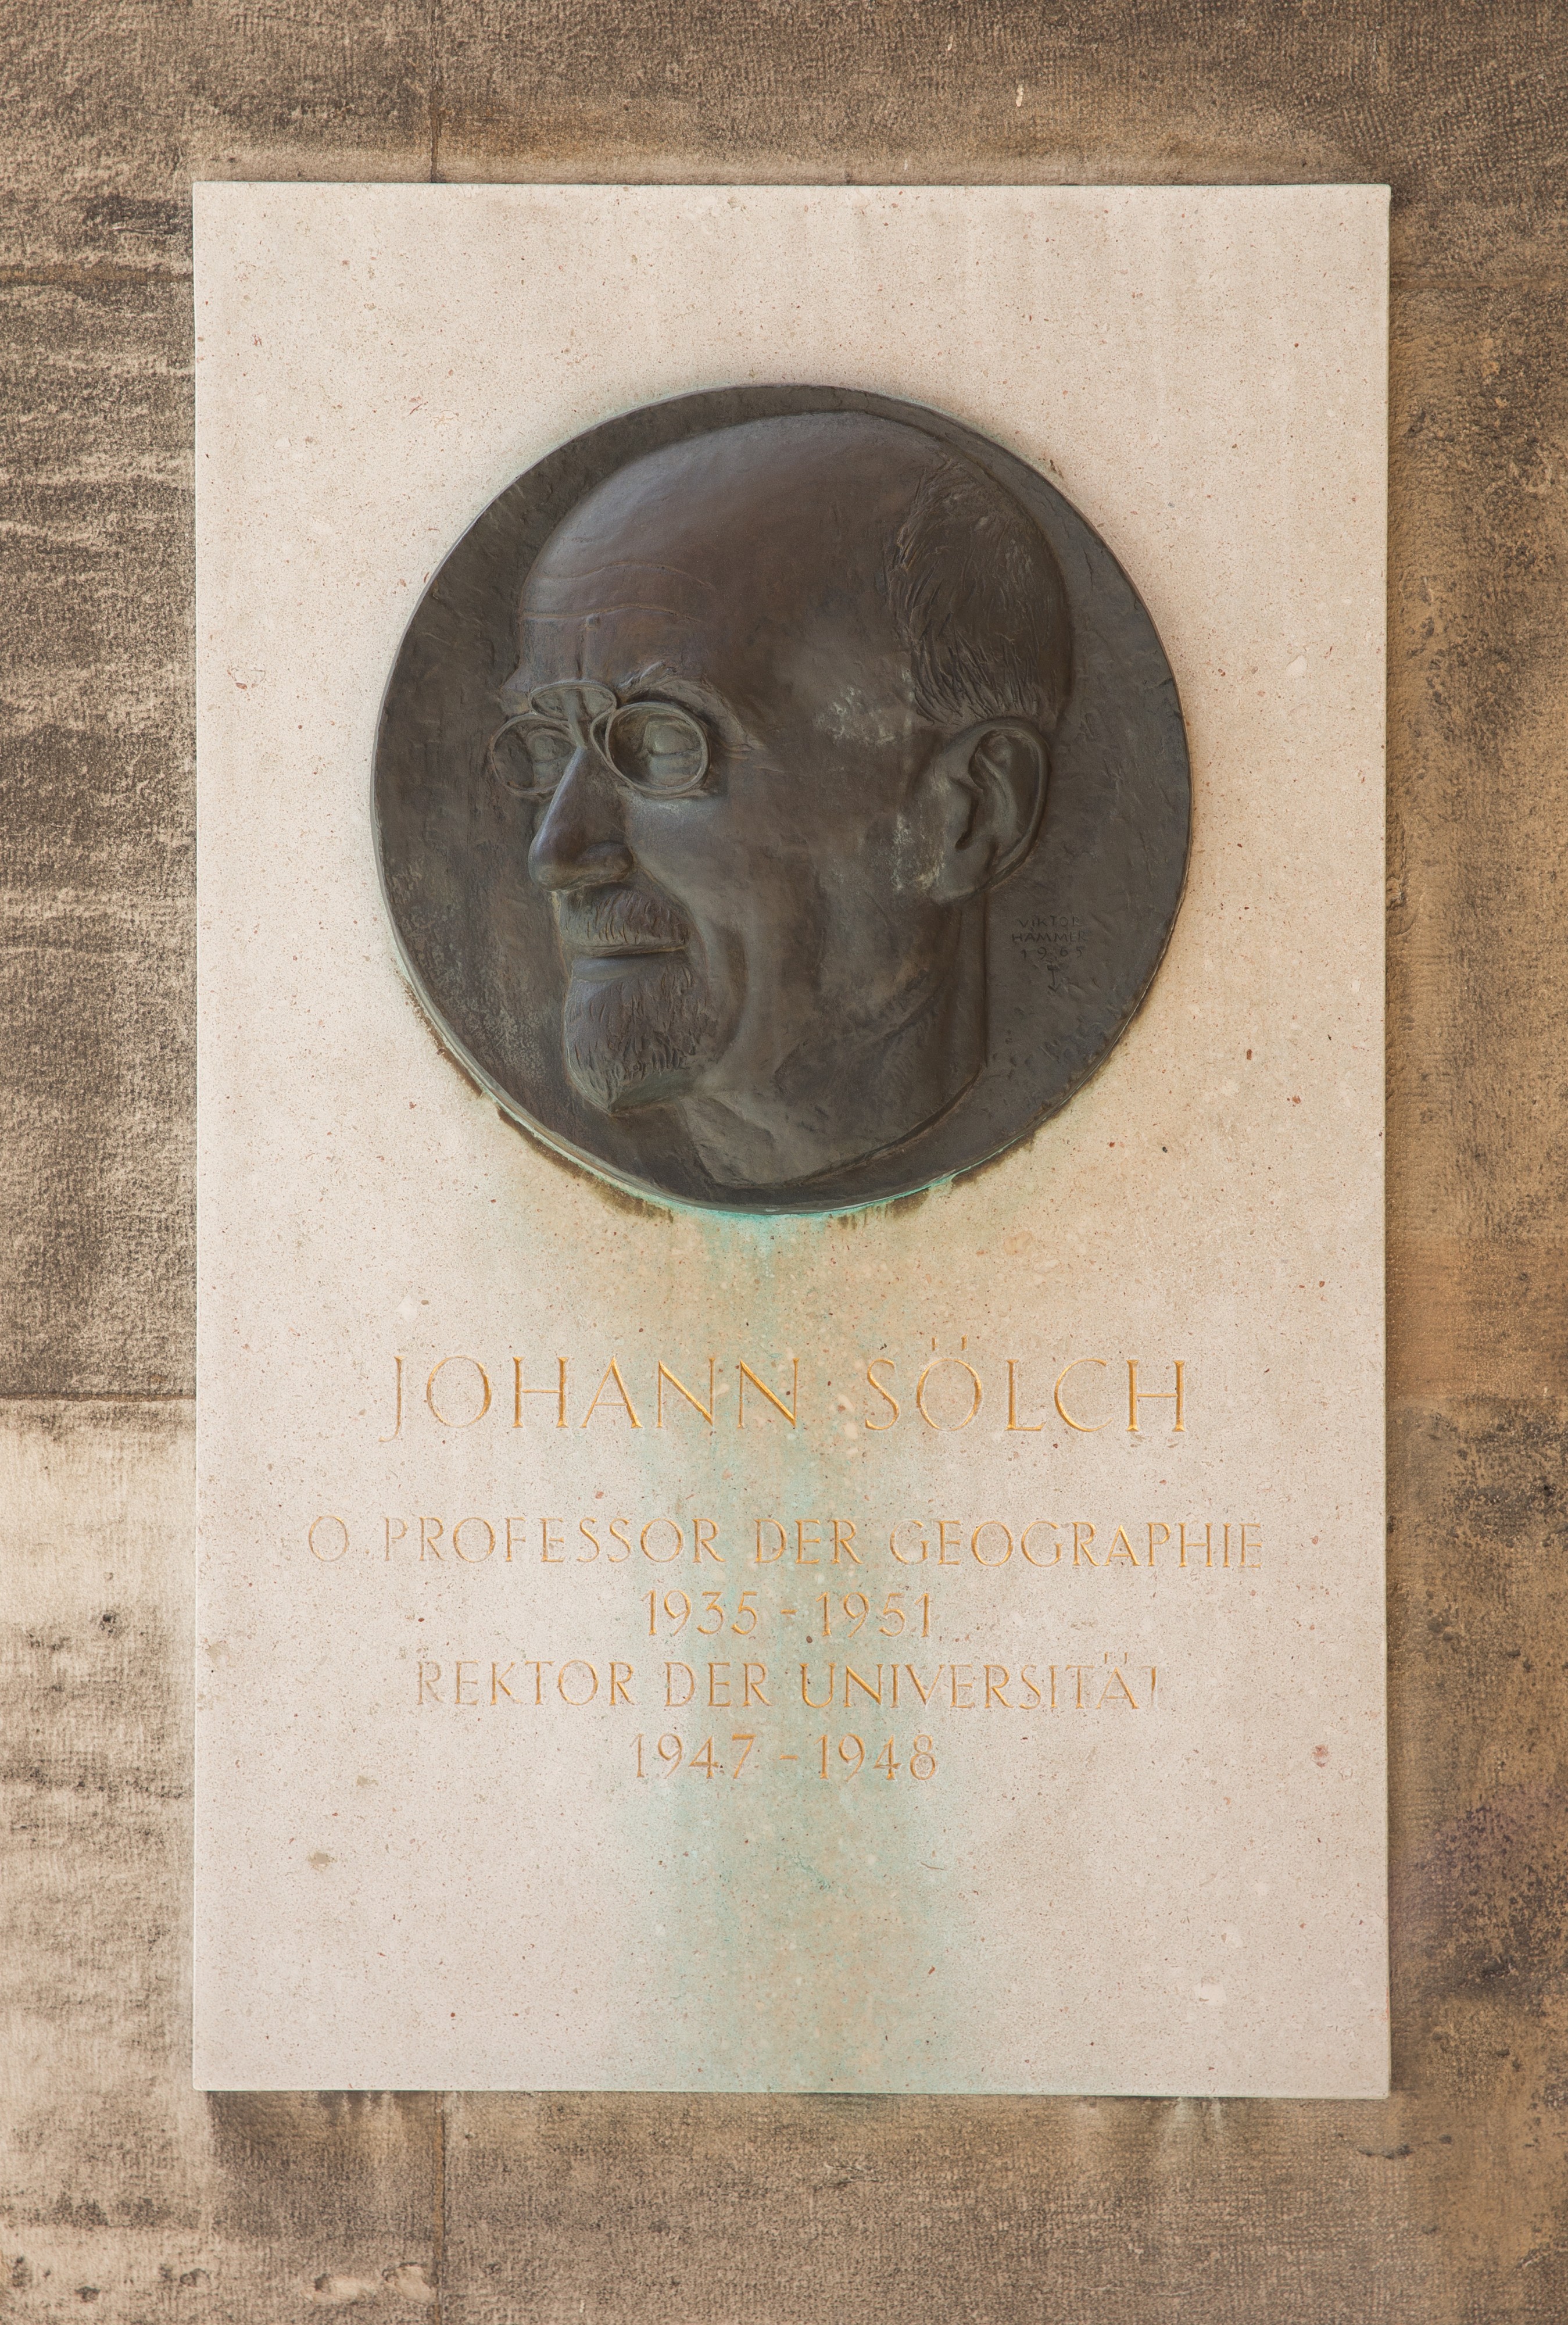 Johann Sölch (1865-1935), geographer, Nr. 137, relief (bronze) in the Arkadenhof of the University of Vienna-3523